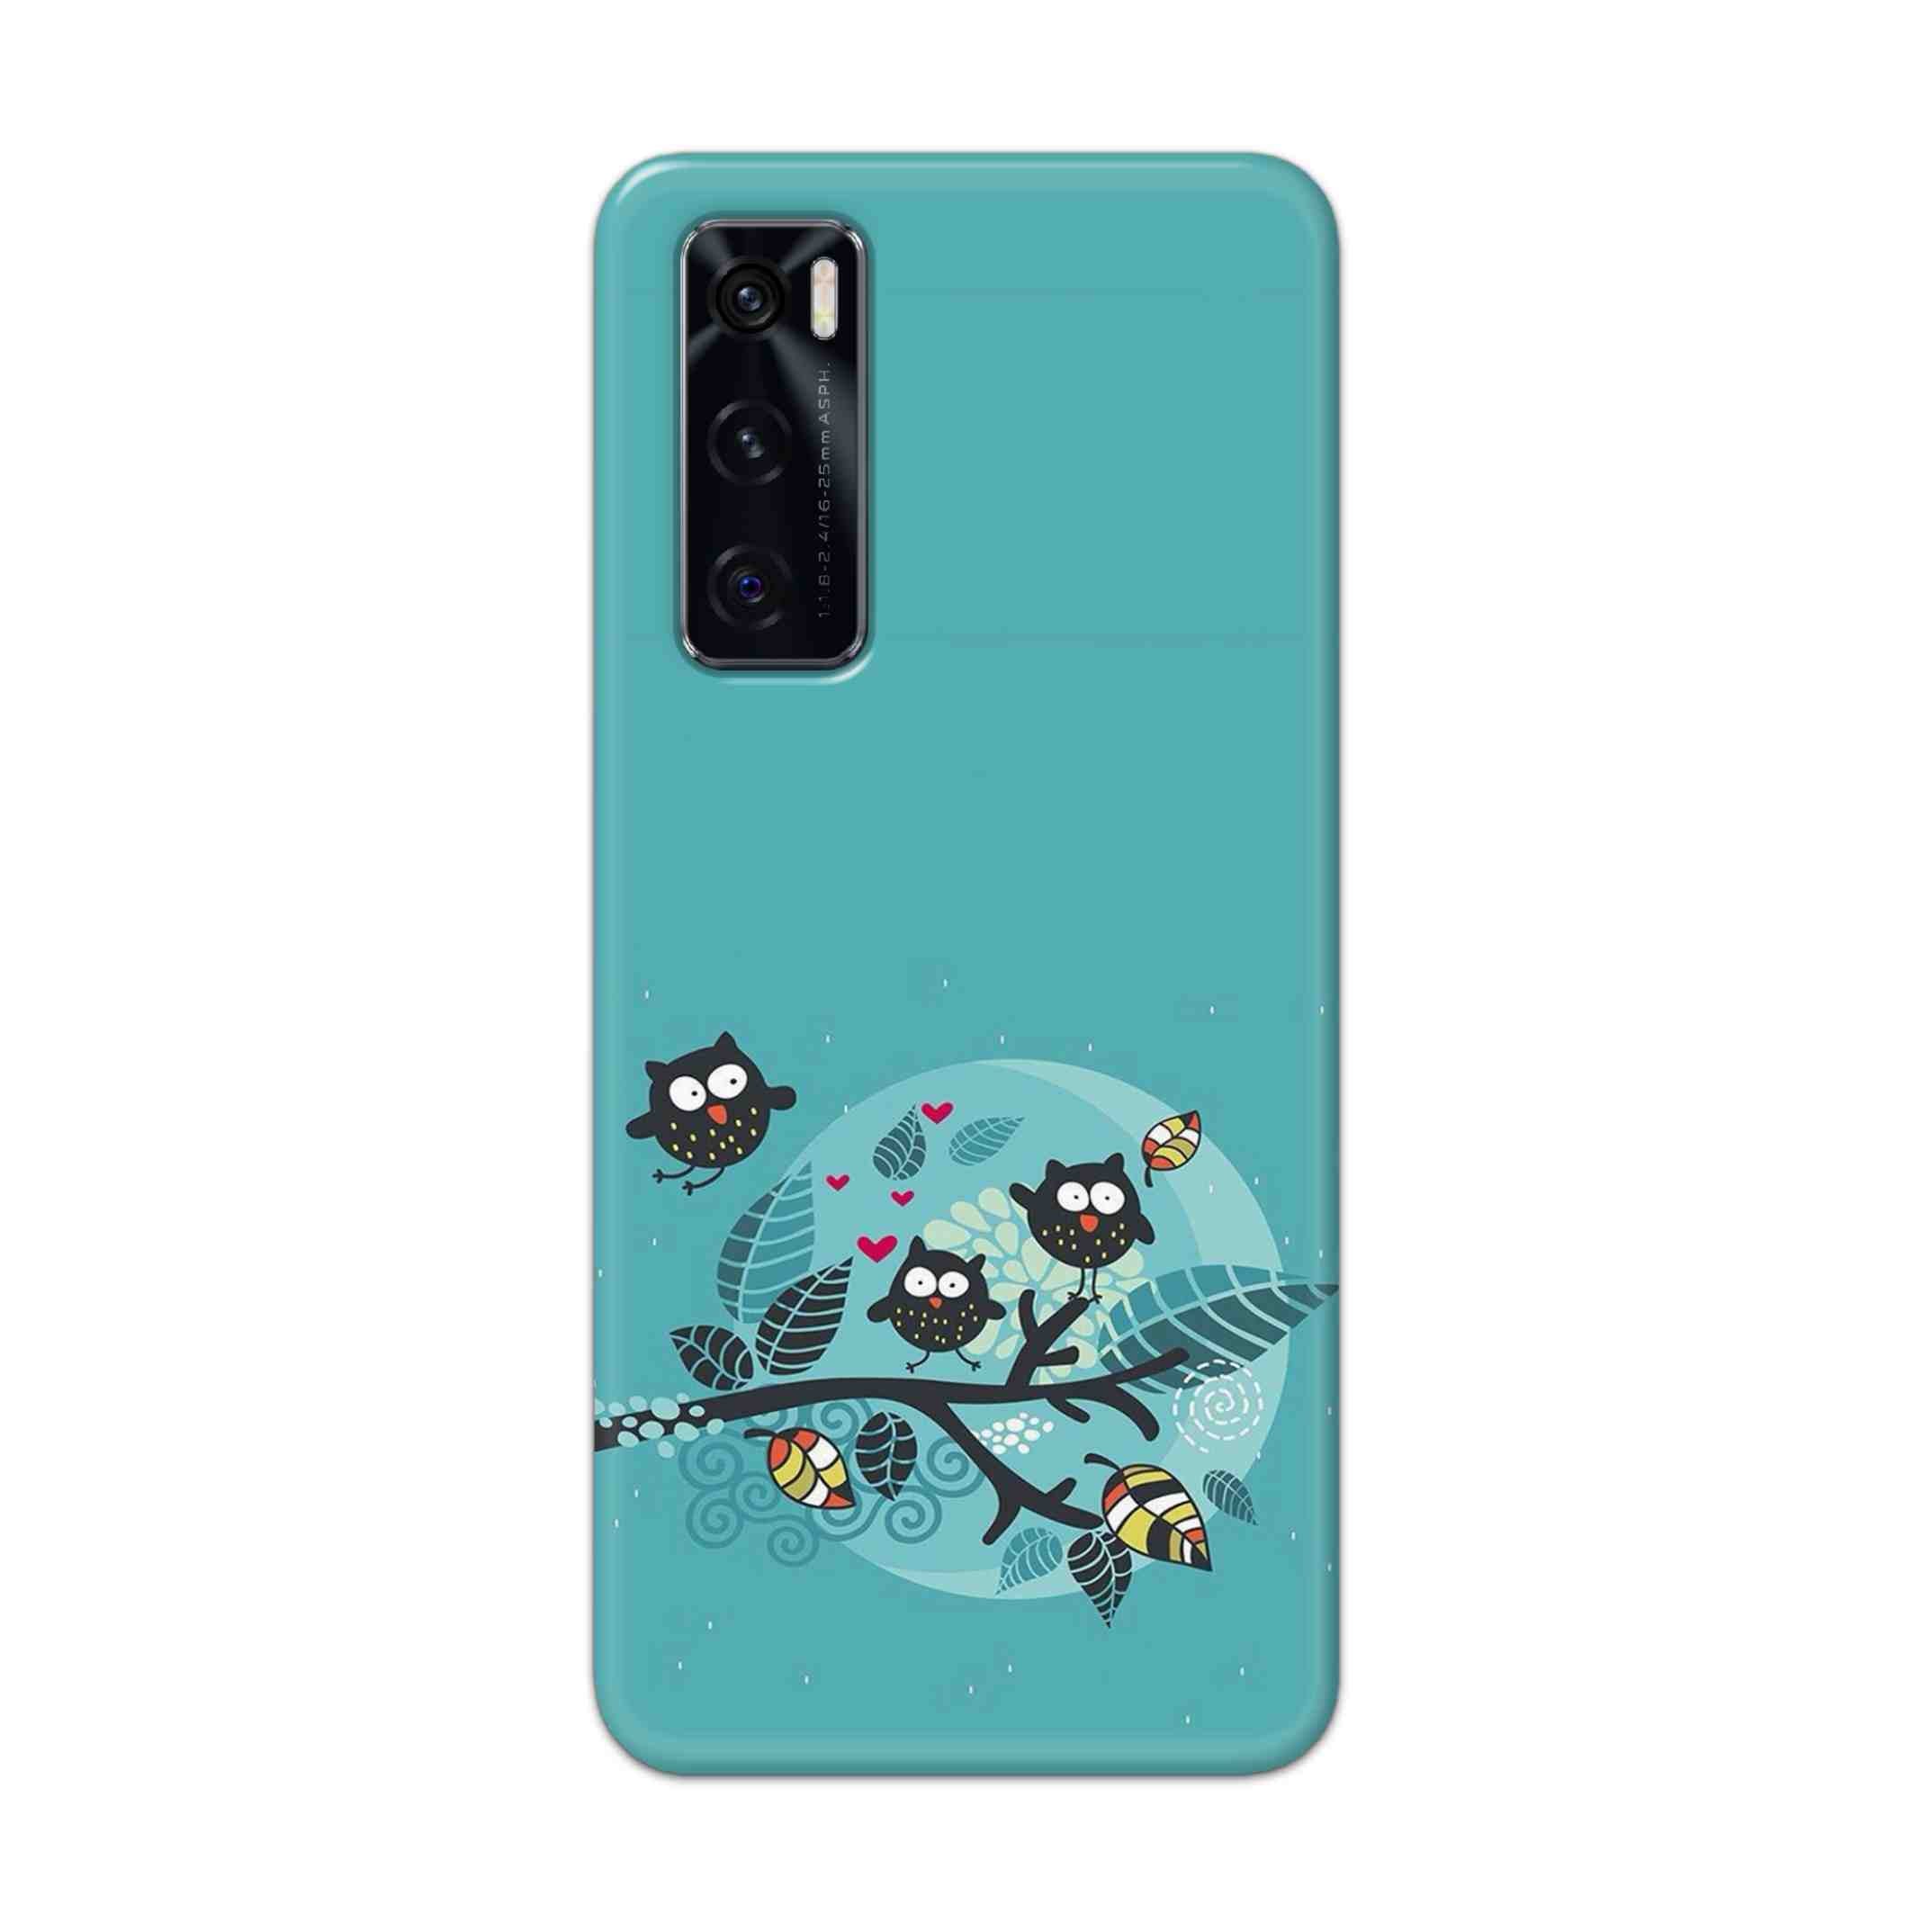 Buy Owl Hard Back Mobile Phone Case Cover For Vivo V20 SE Online